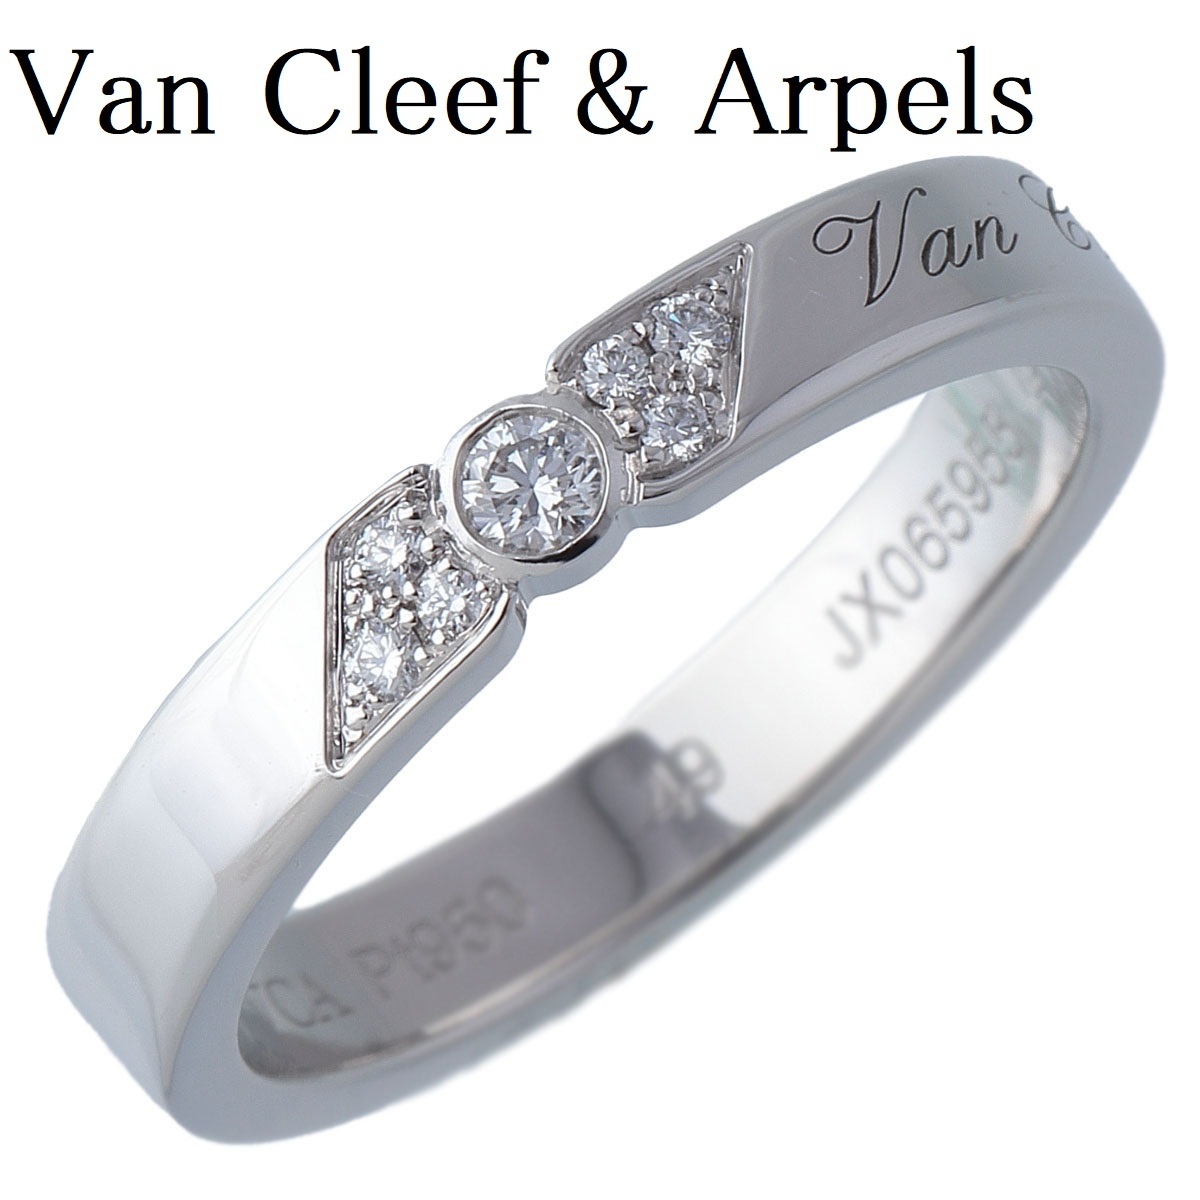  Van Cleef & Arpels toe Jules siniachu-ru etoile marriage diamond ring #49 PT950 new goods finishing settled [16532]